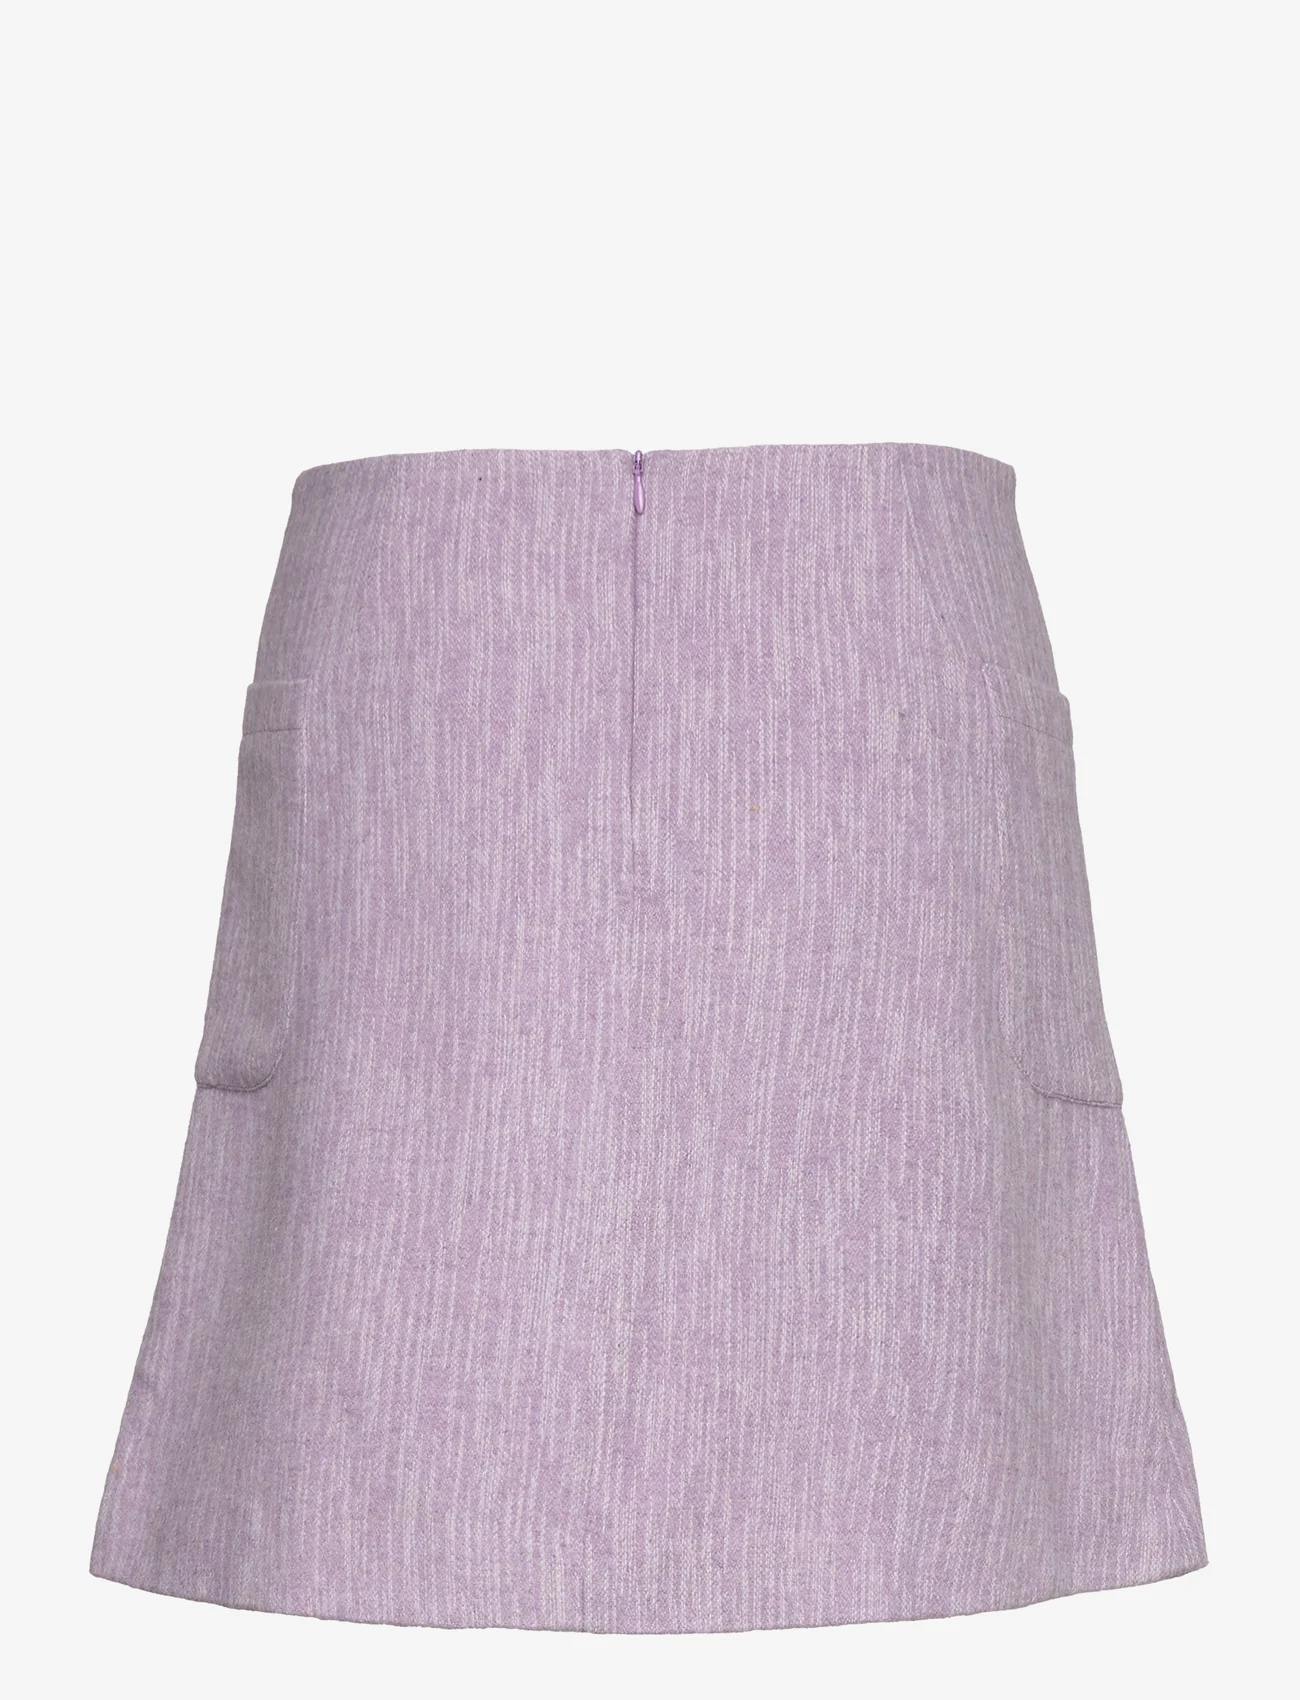 MAUD - Bonnie Skirt - kurze röcke - lavender - 1